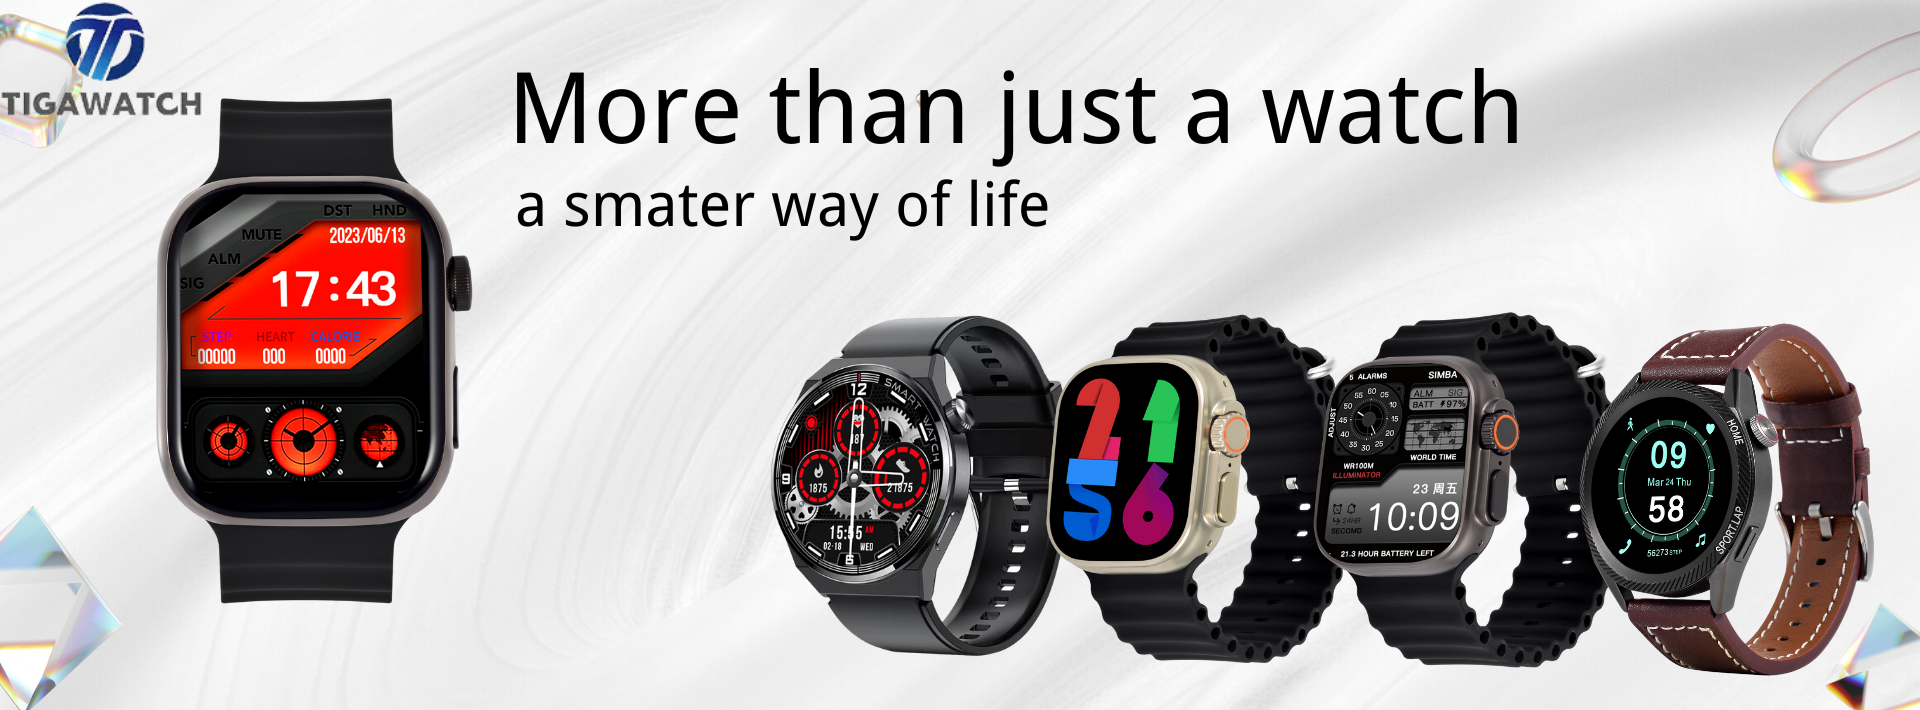 Tigawatch Smartwatch